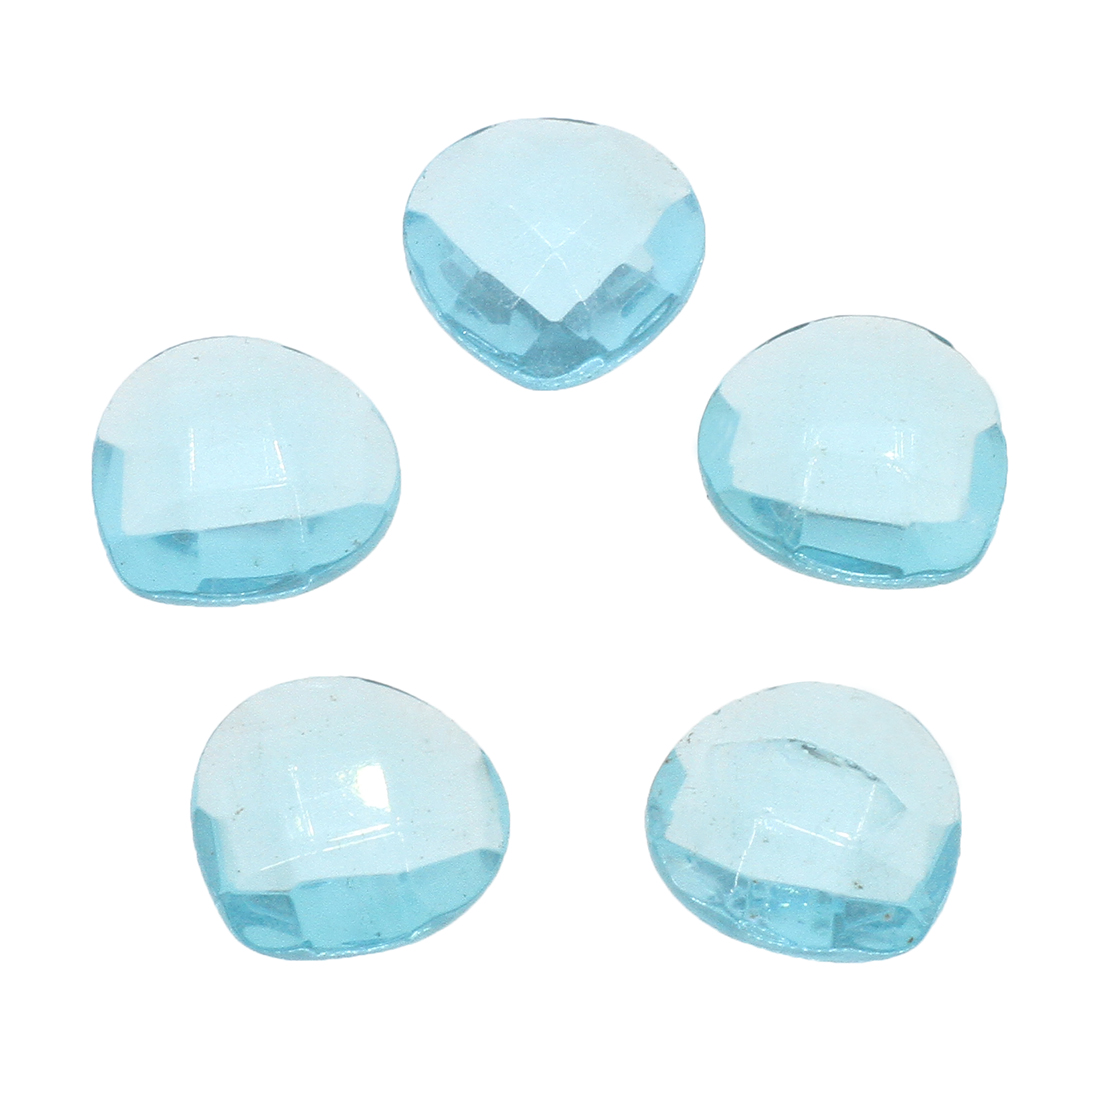 1 crystal blue